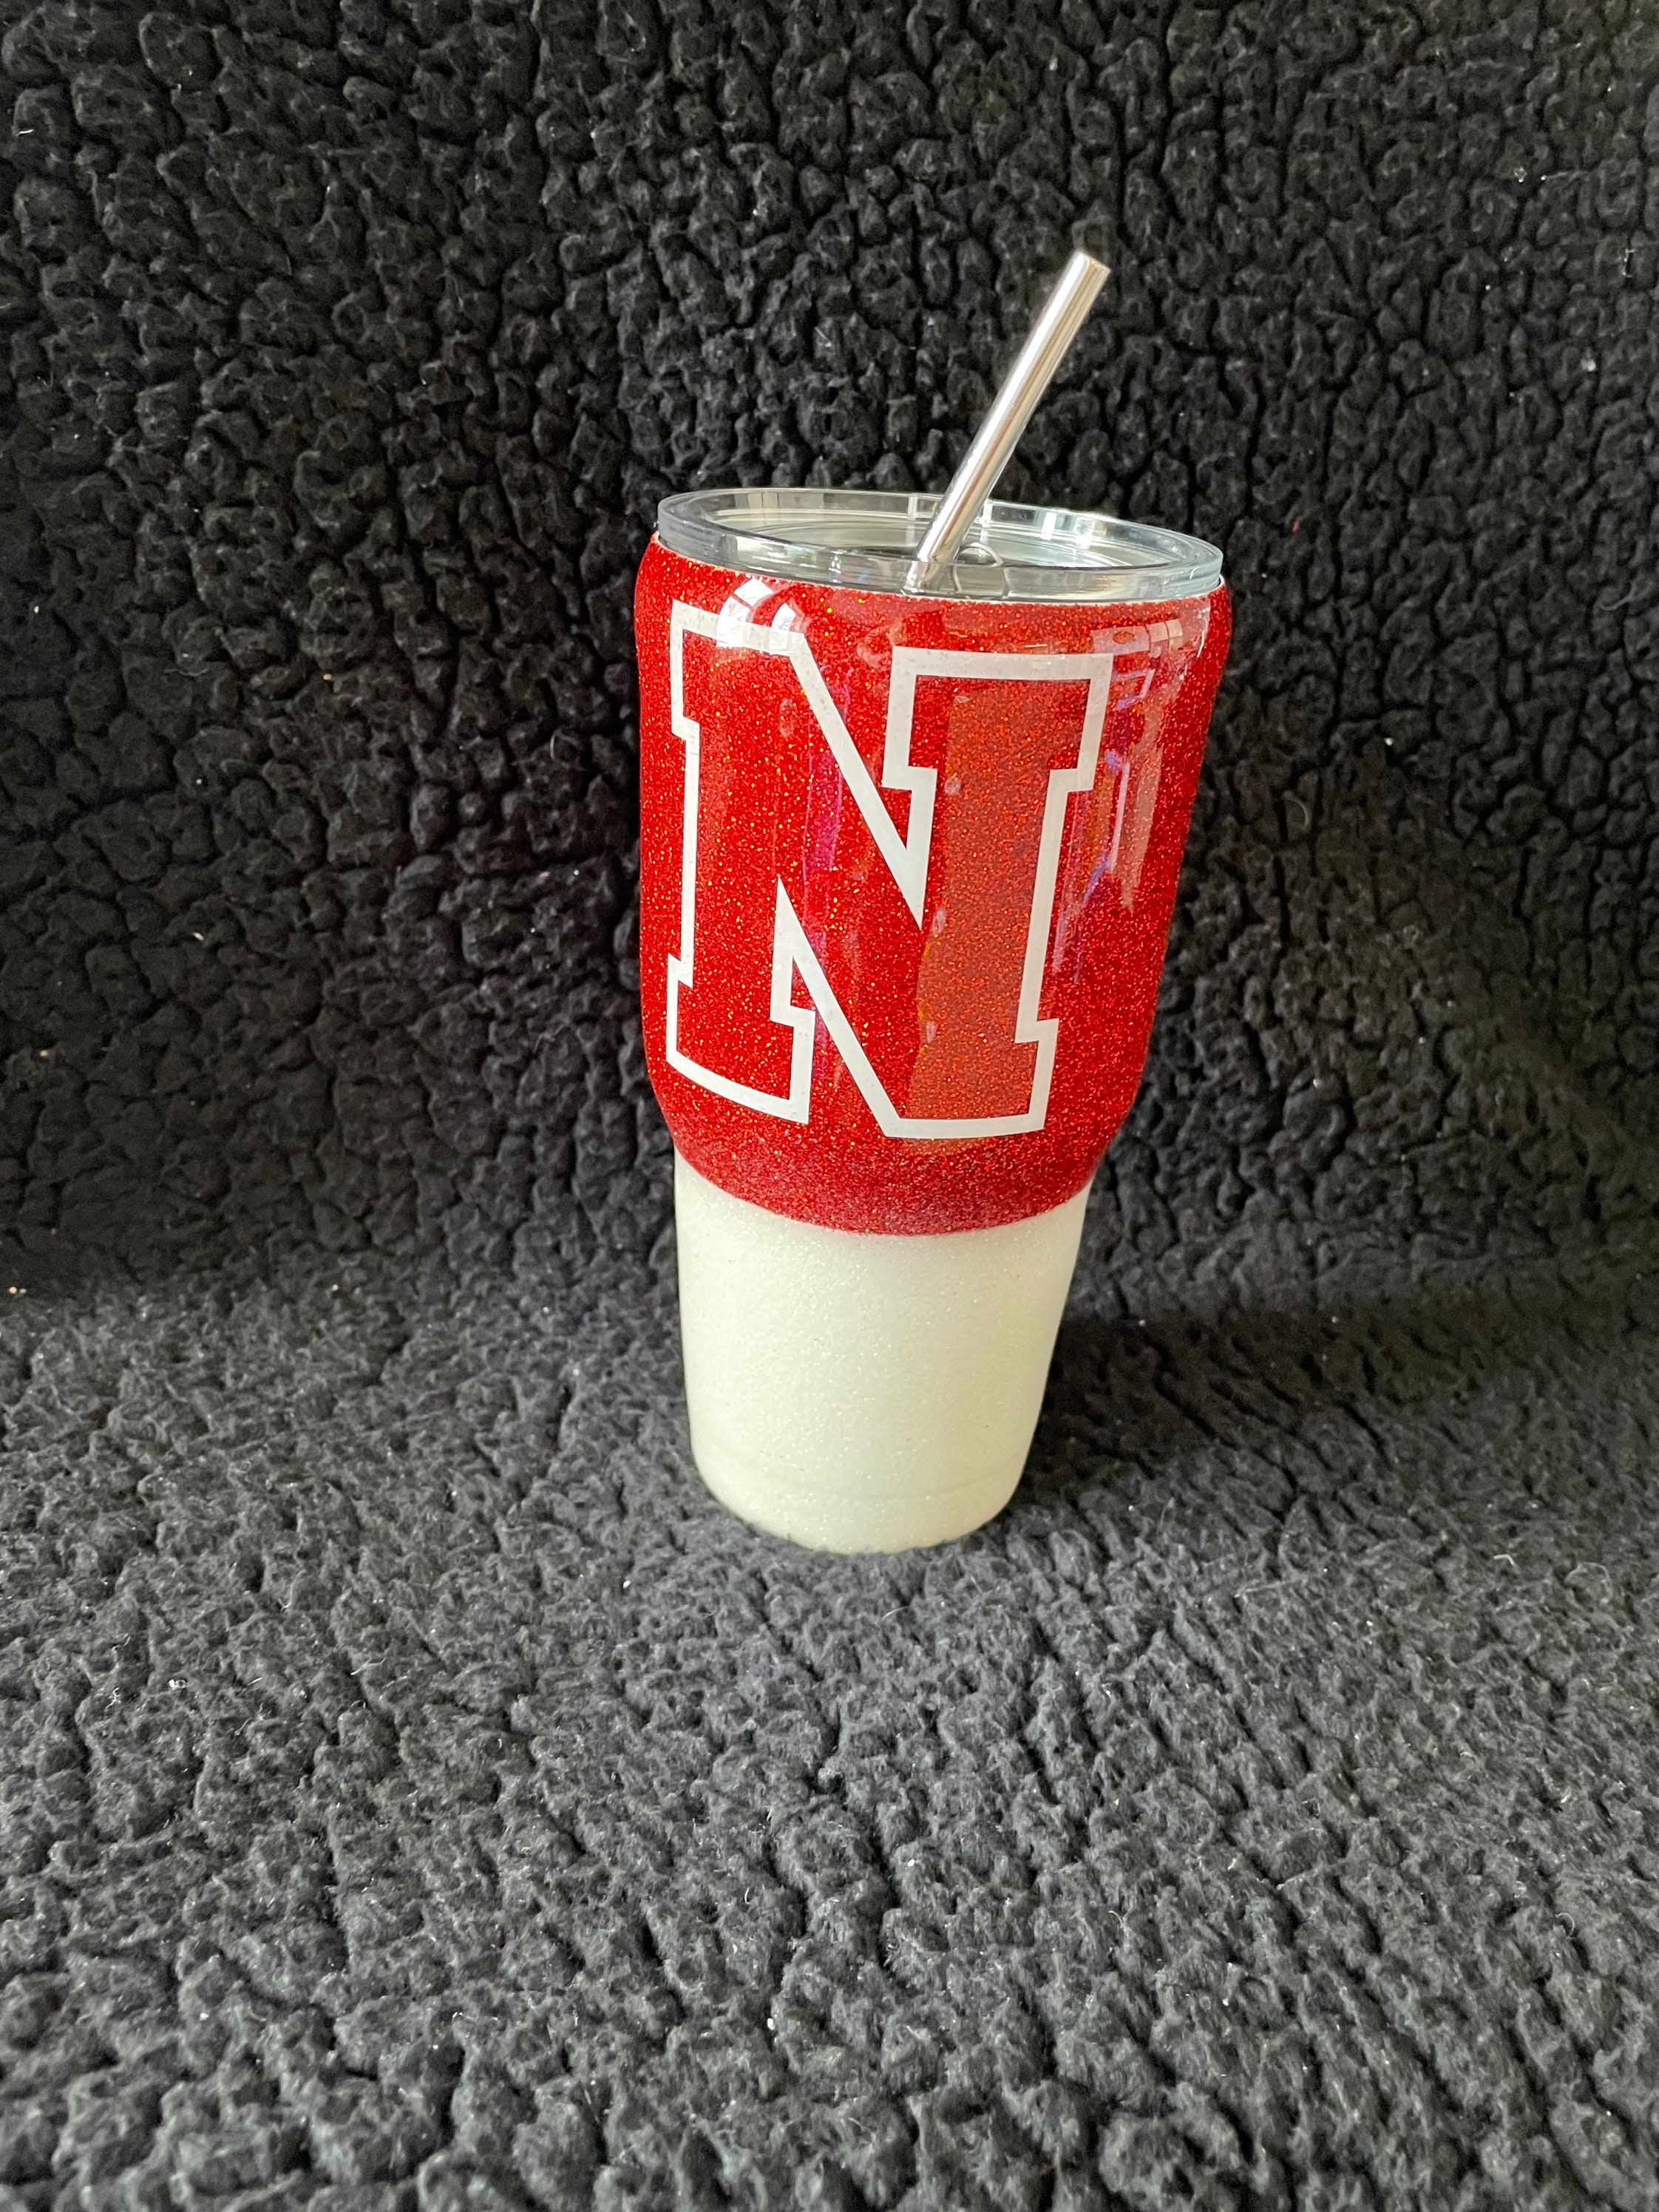 Licensed University of Nebraska YETI Coolers